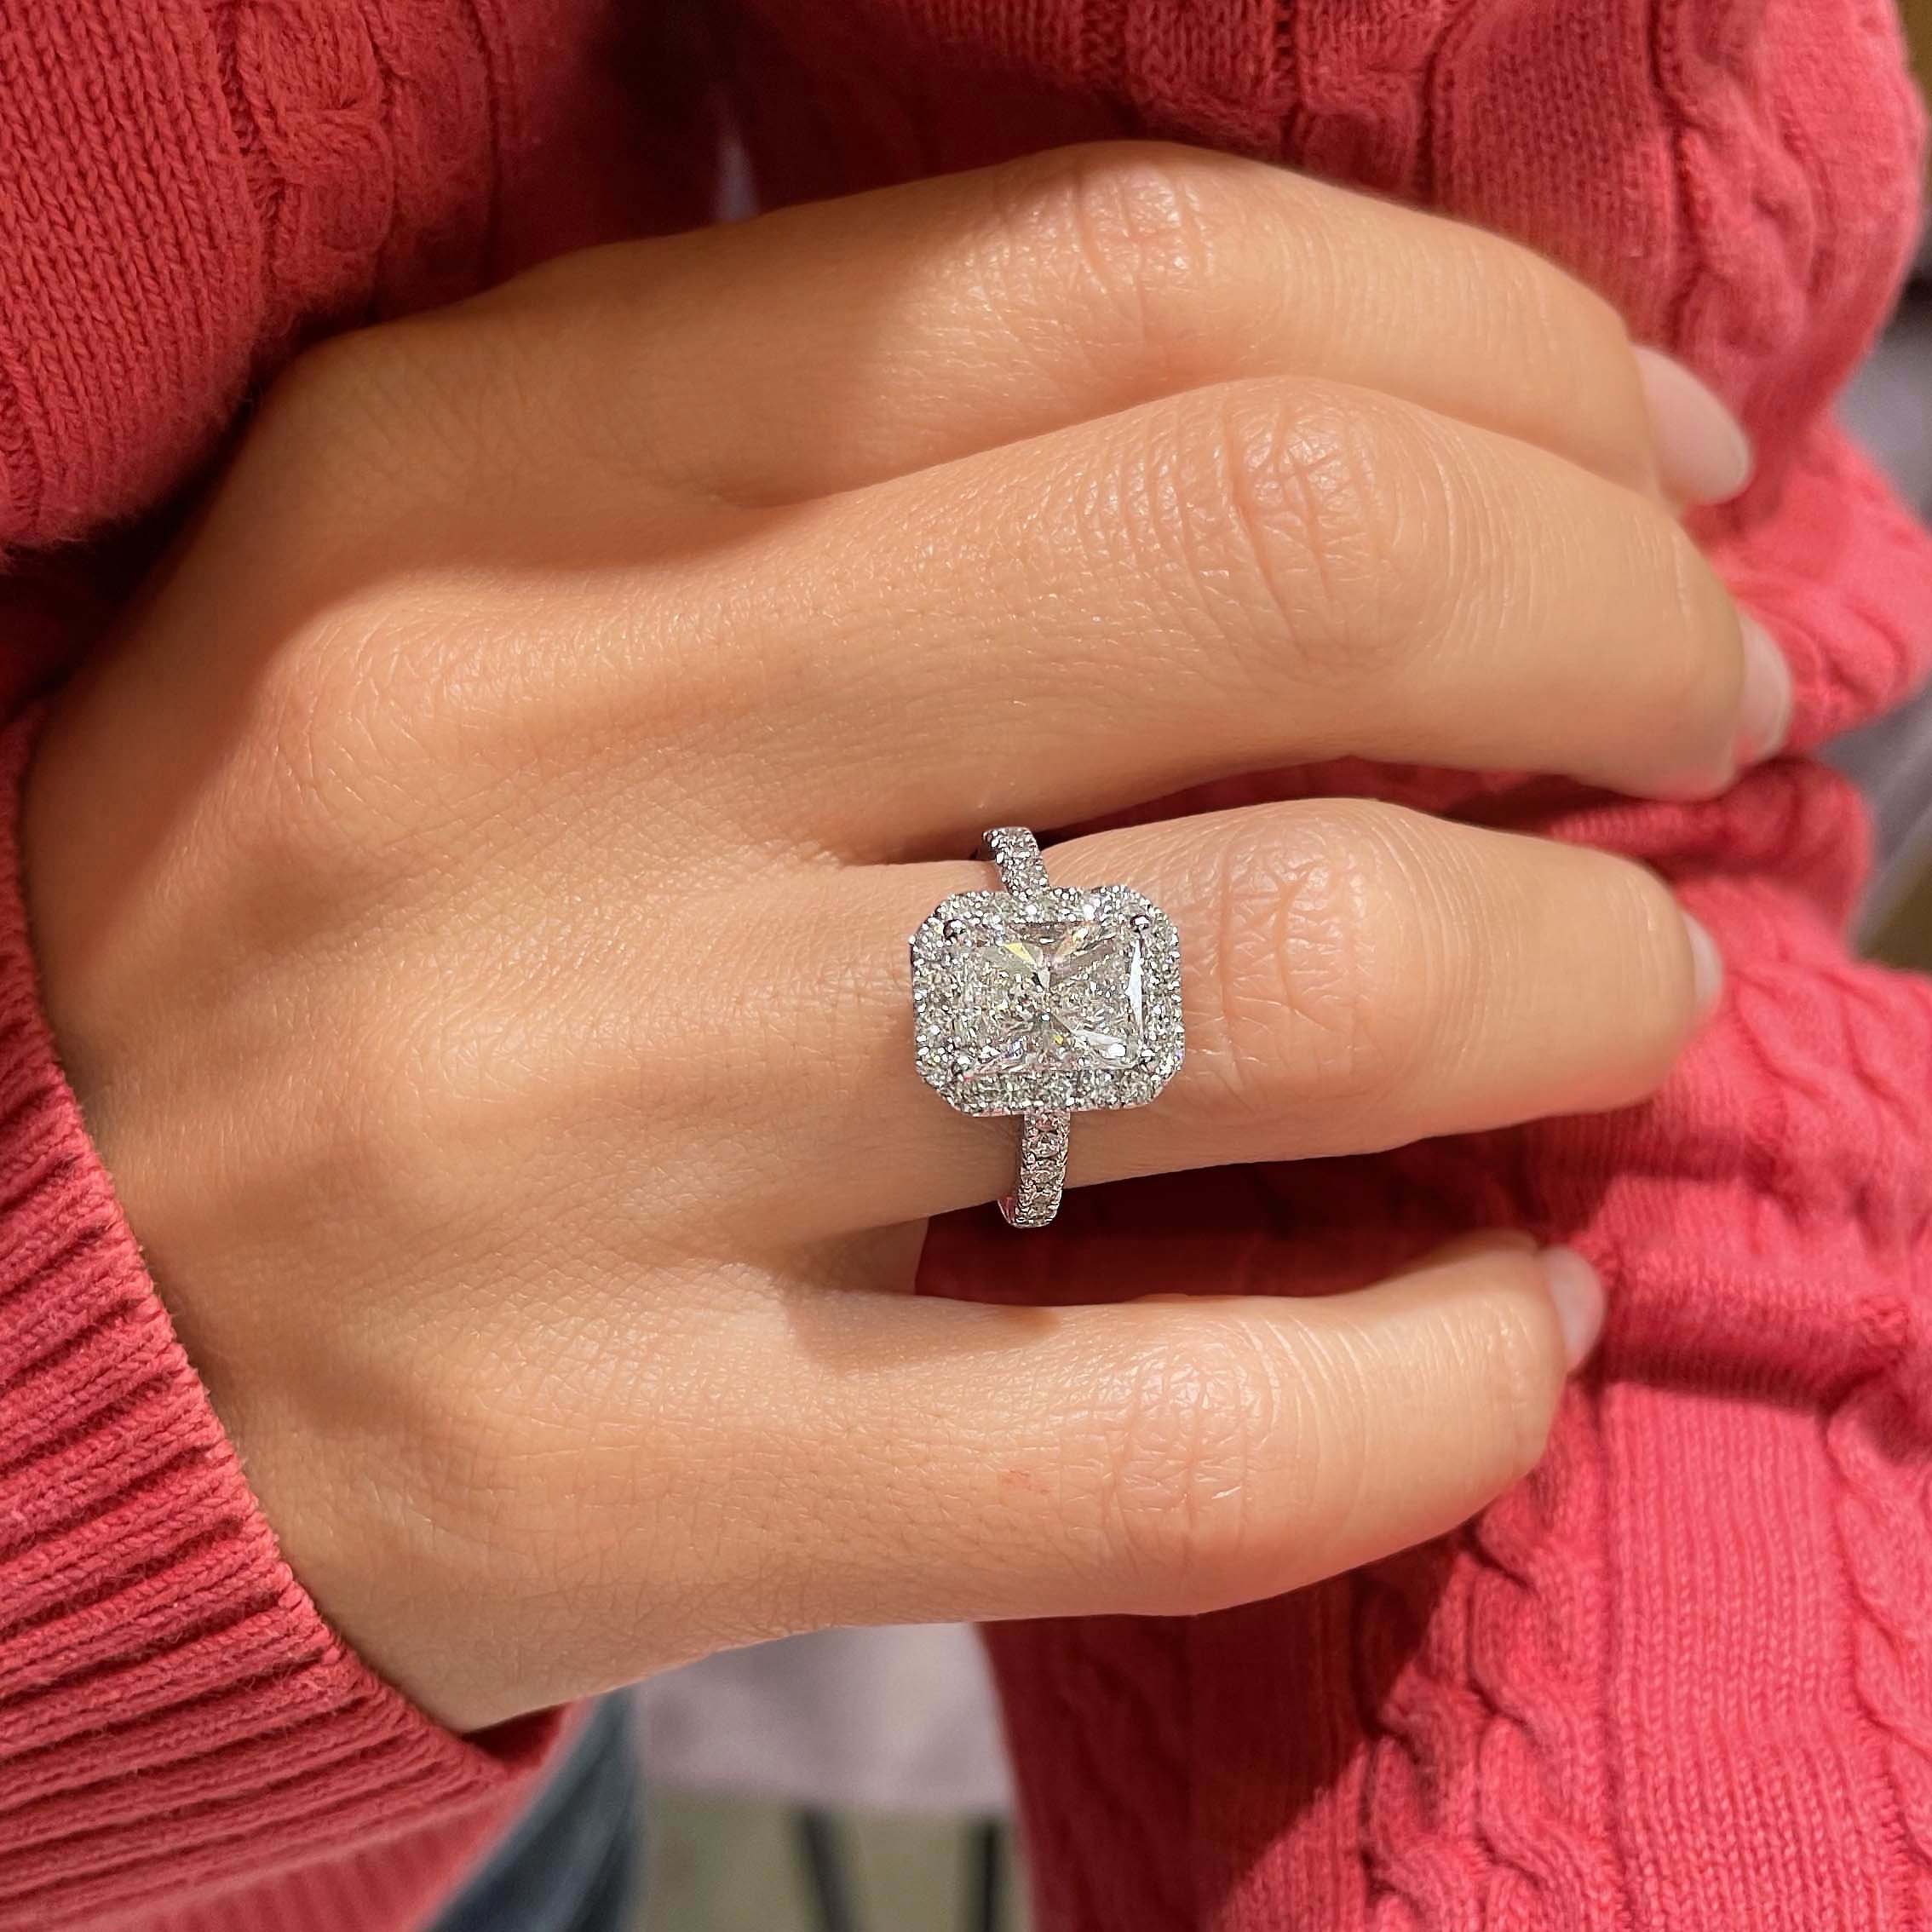 Andrea Diamond Engagement Ring   (2.5 Carat) -18K White Gold (RTS)